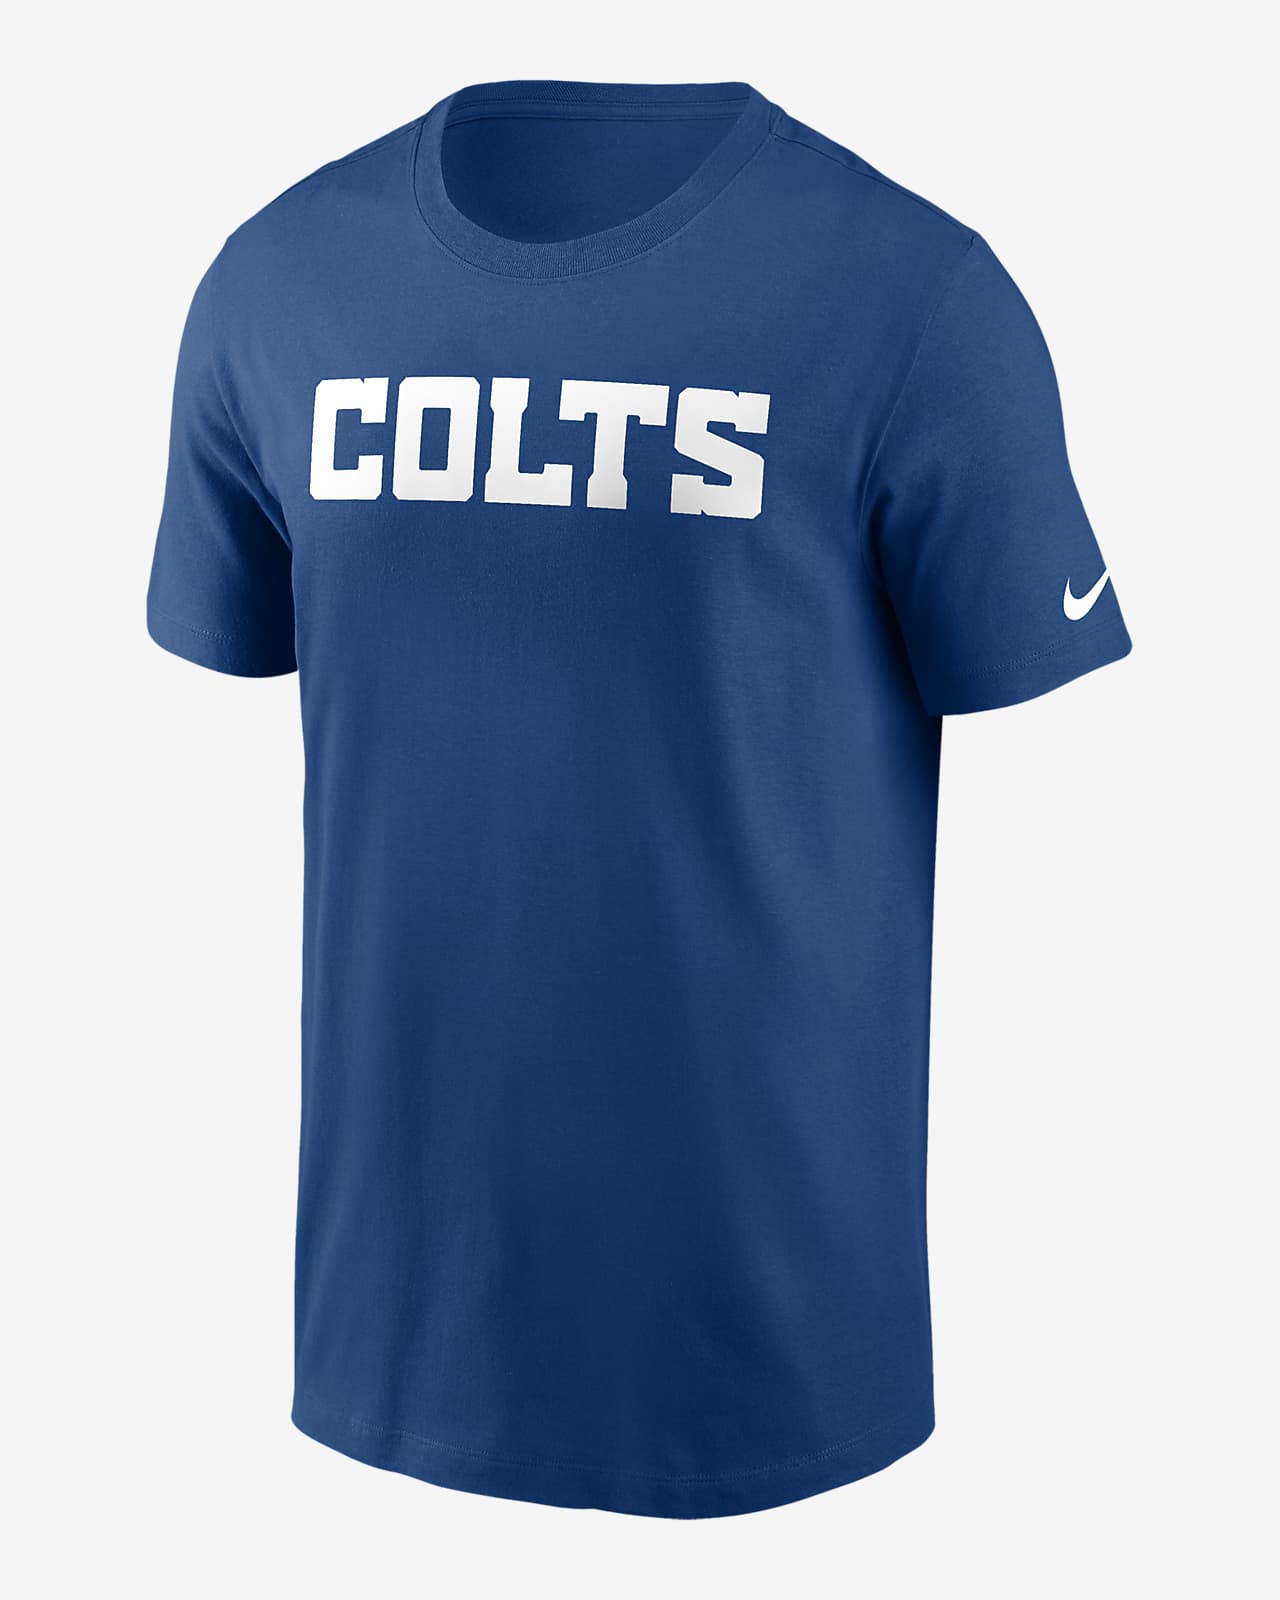 Indianapolis Colts Primetime Wordmark Essential Men's Nike NFL T-Shirt